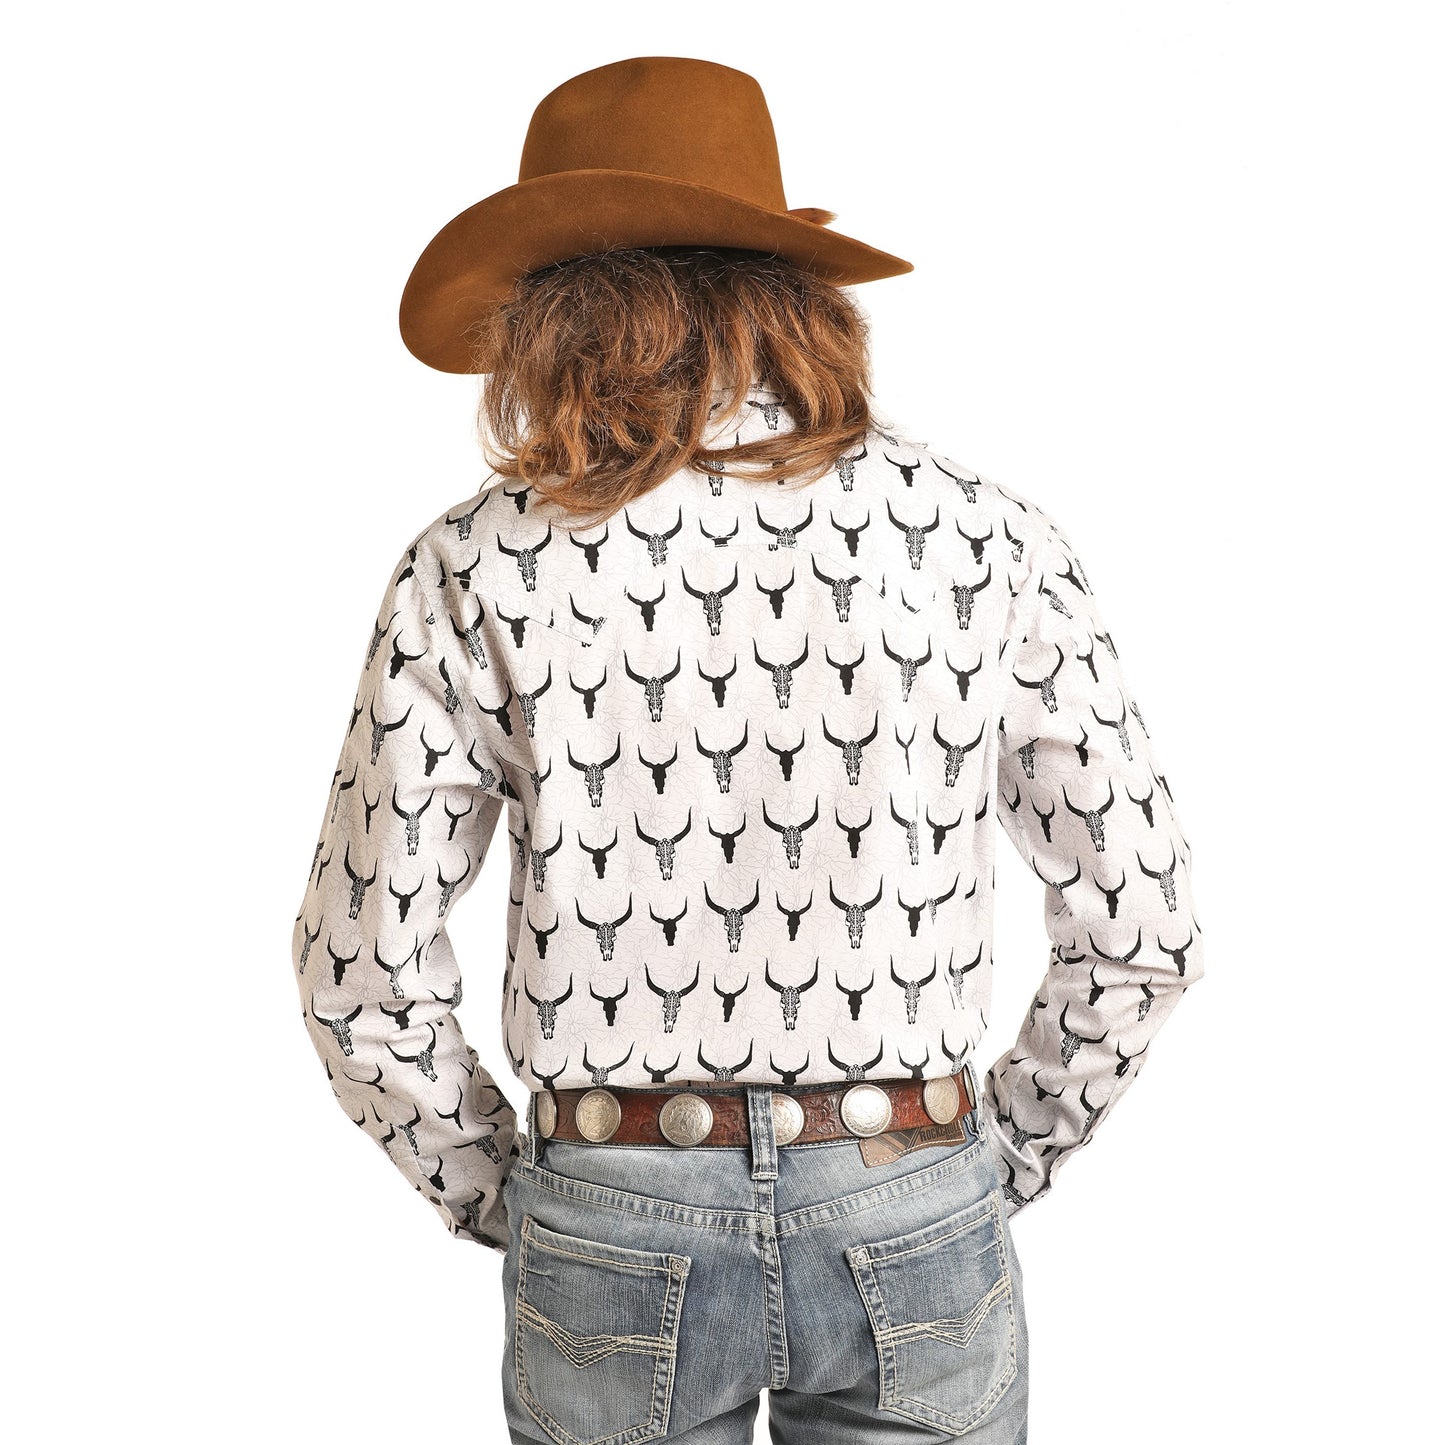 Rock & Roll Cowboy Men's Dale Brisby Steer Skull Snap Shirt B2S3078